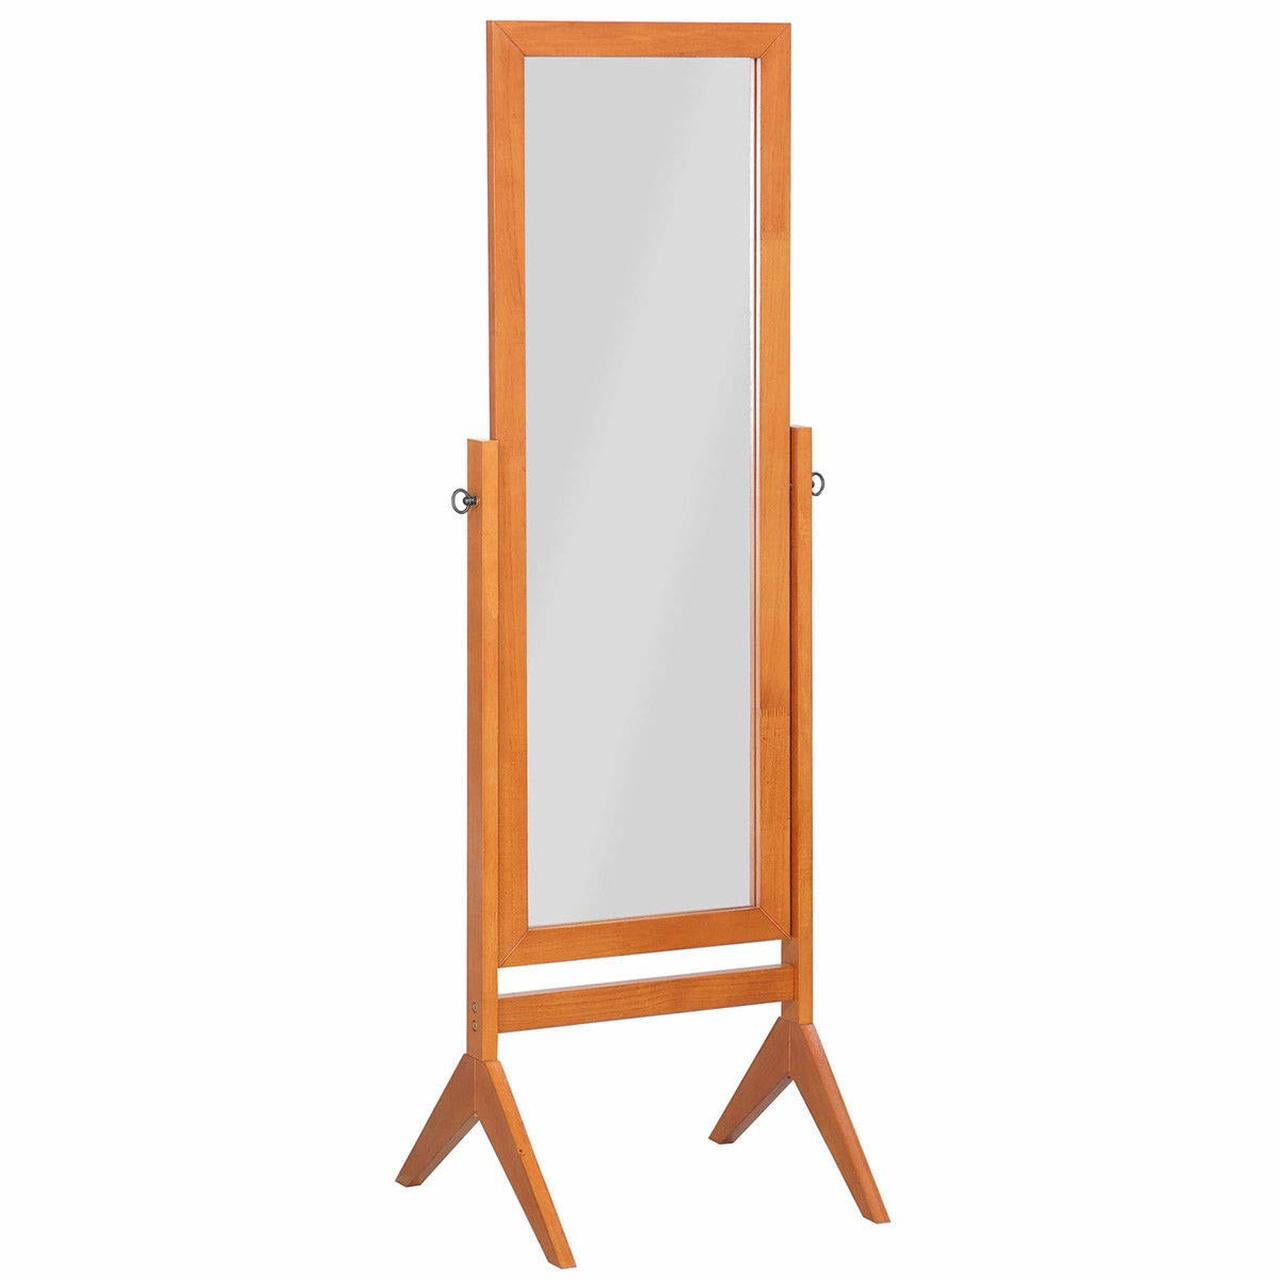 Oak Finish Wood Rectangular Cheval Floor Mirror, Free Standing Mirror